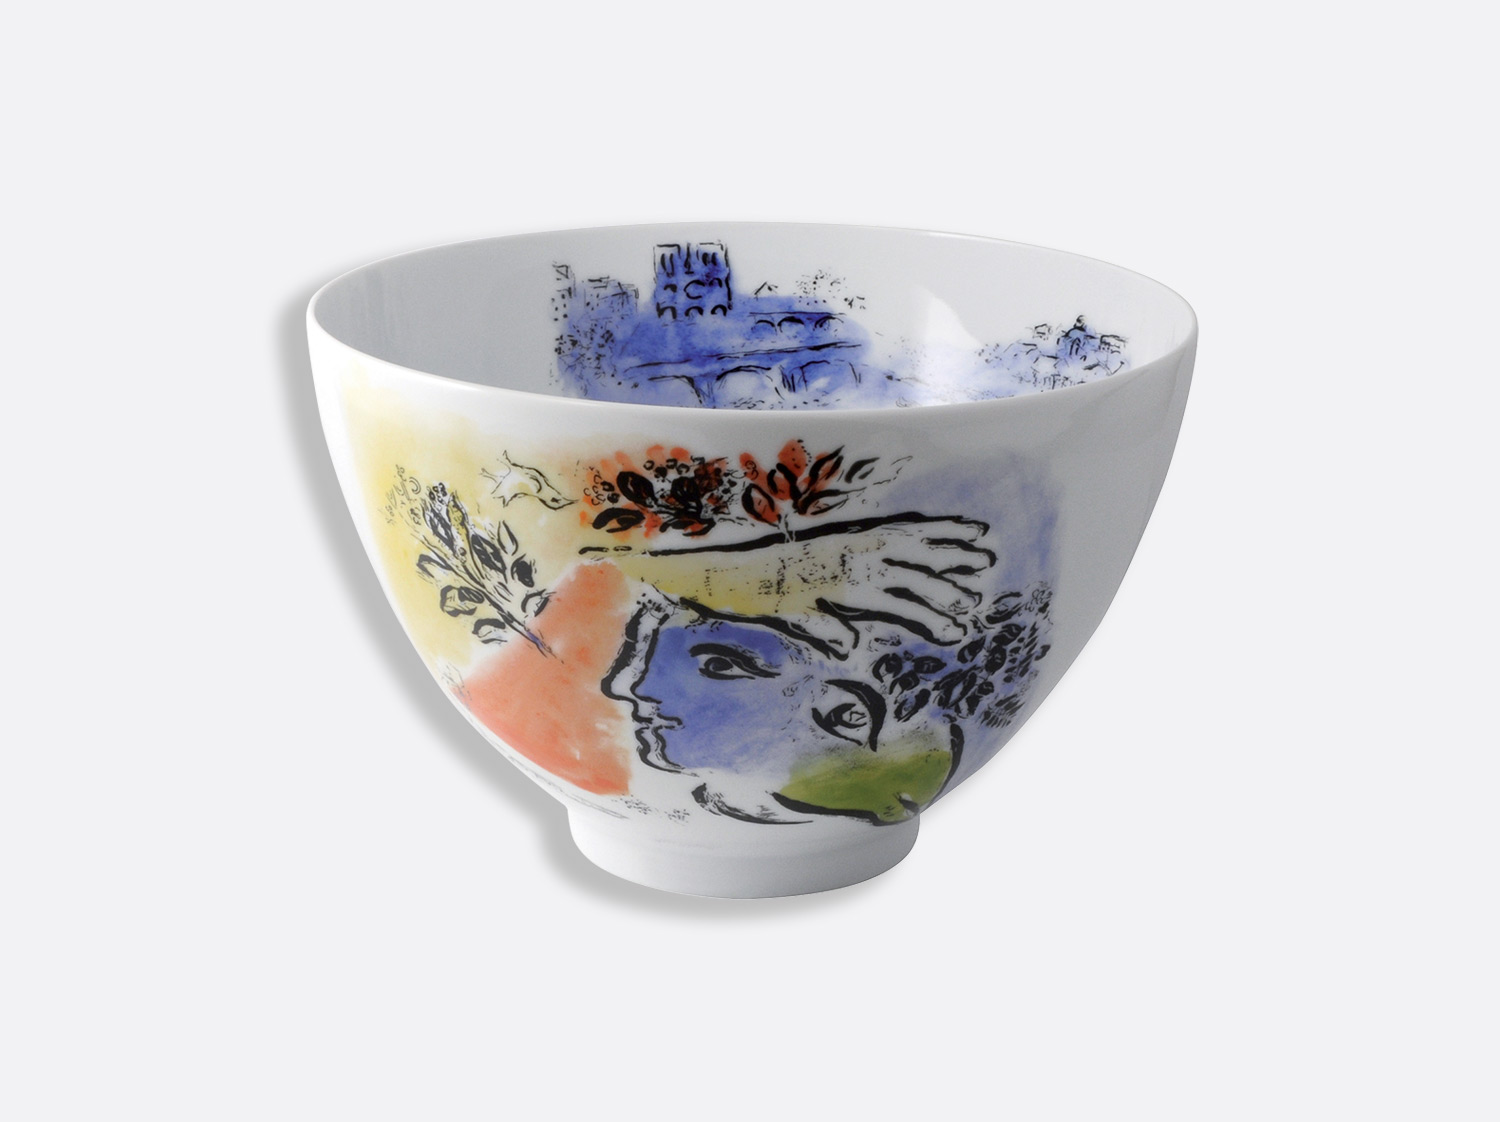 China Salad bowl "Le ciel bleu" 10.5" of the collection Collect chagall le ciel bleu 1964 | Bernardaud